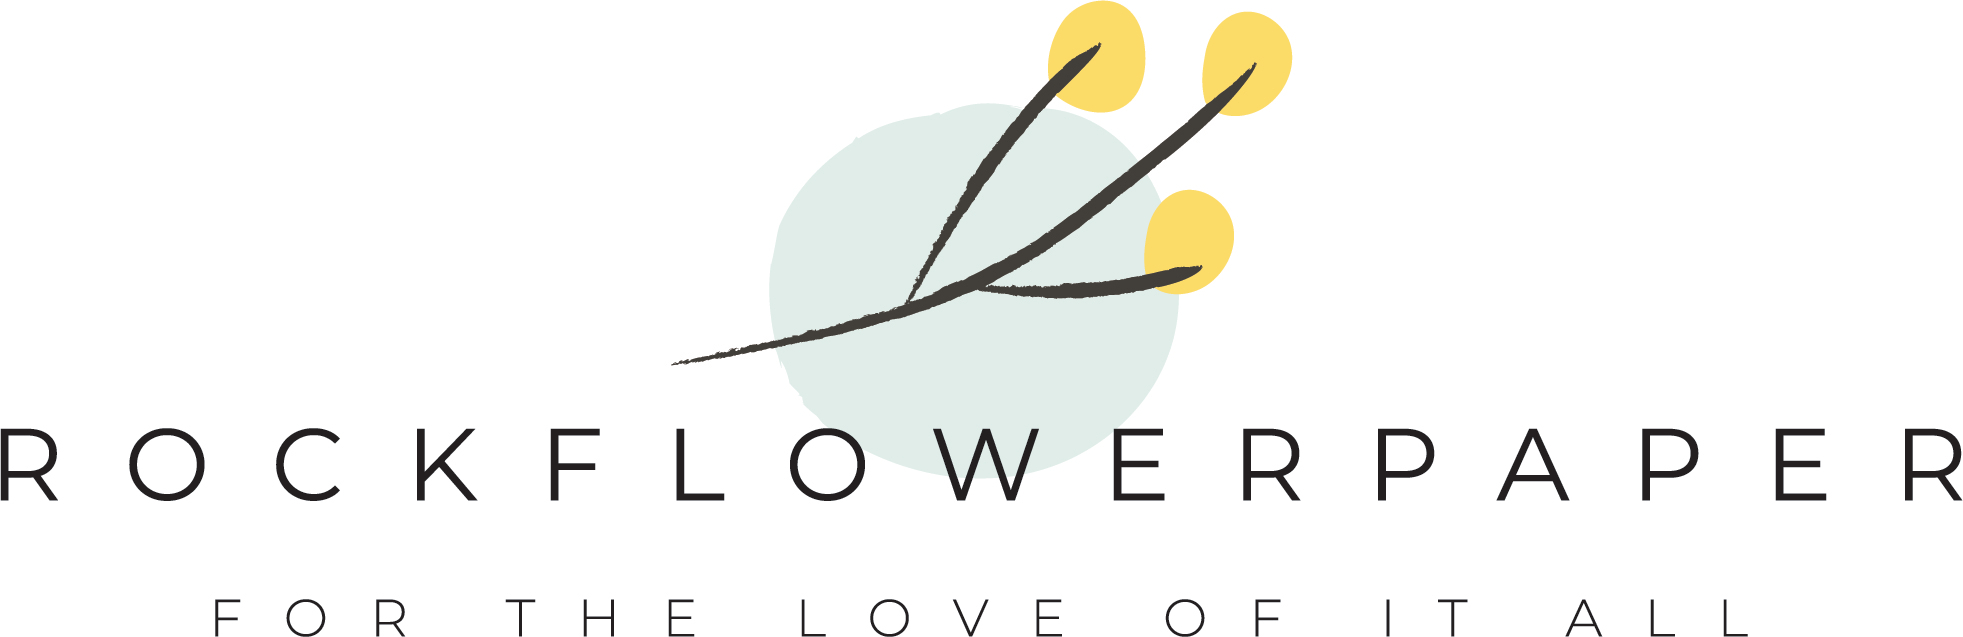 rockflowerpaper1 logo